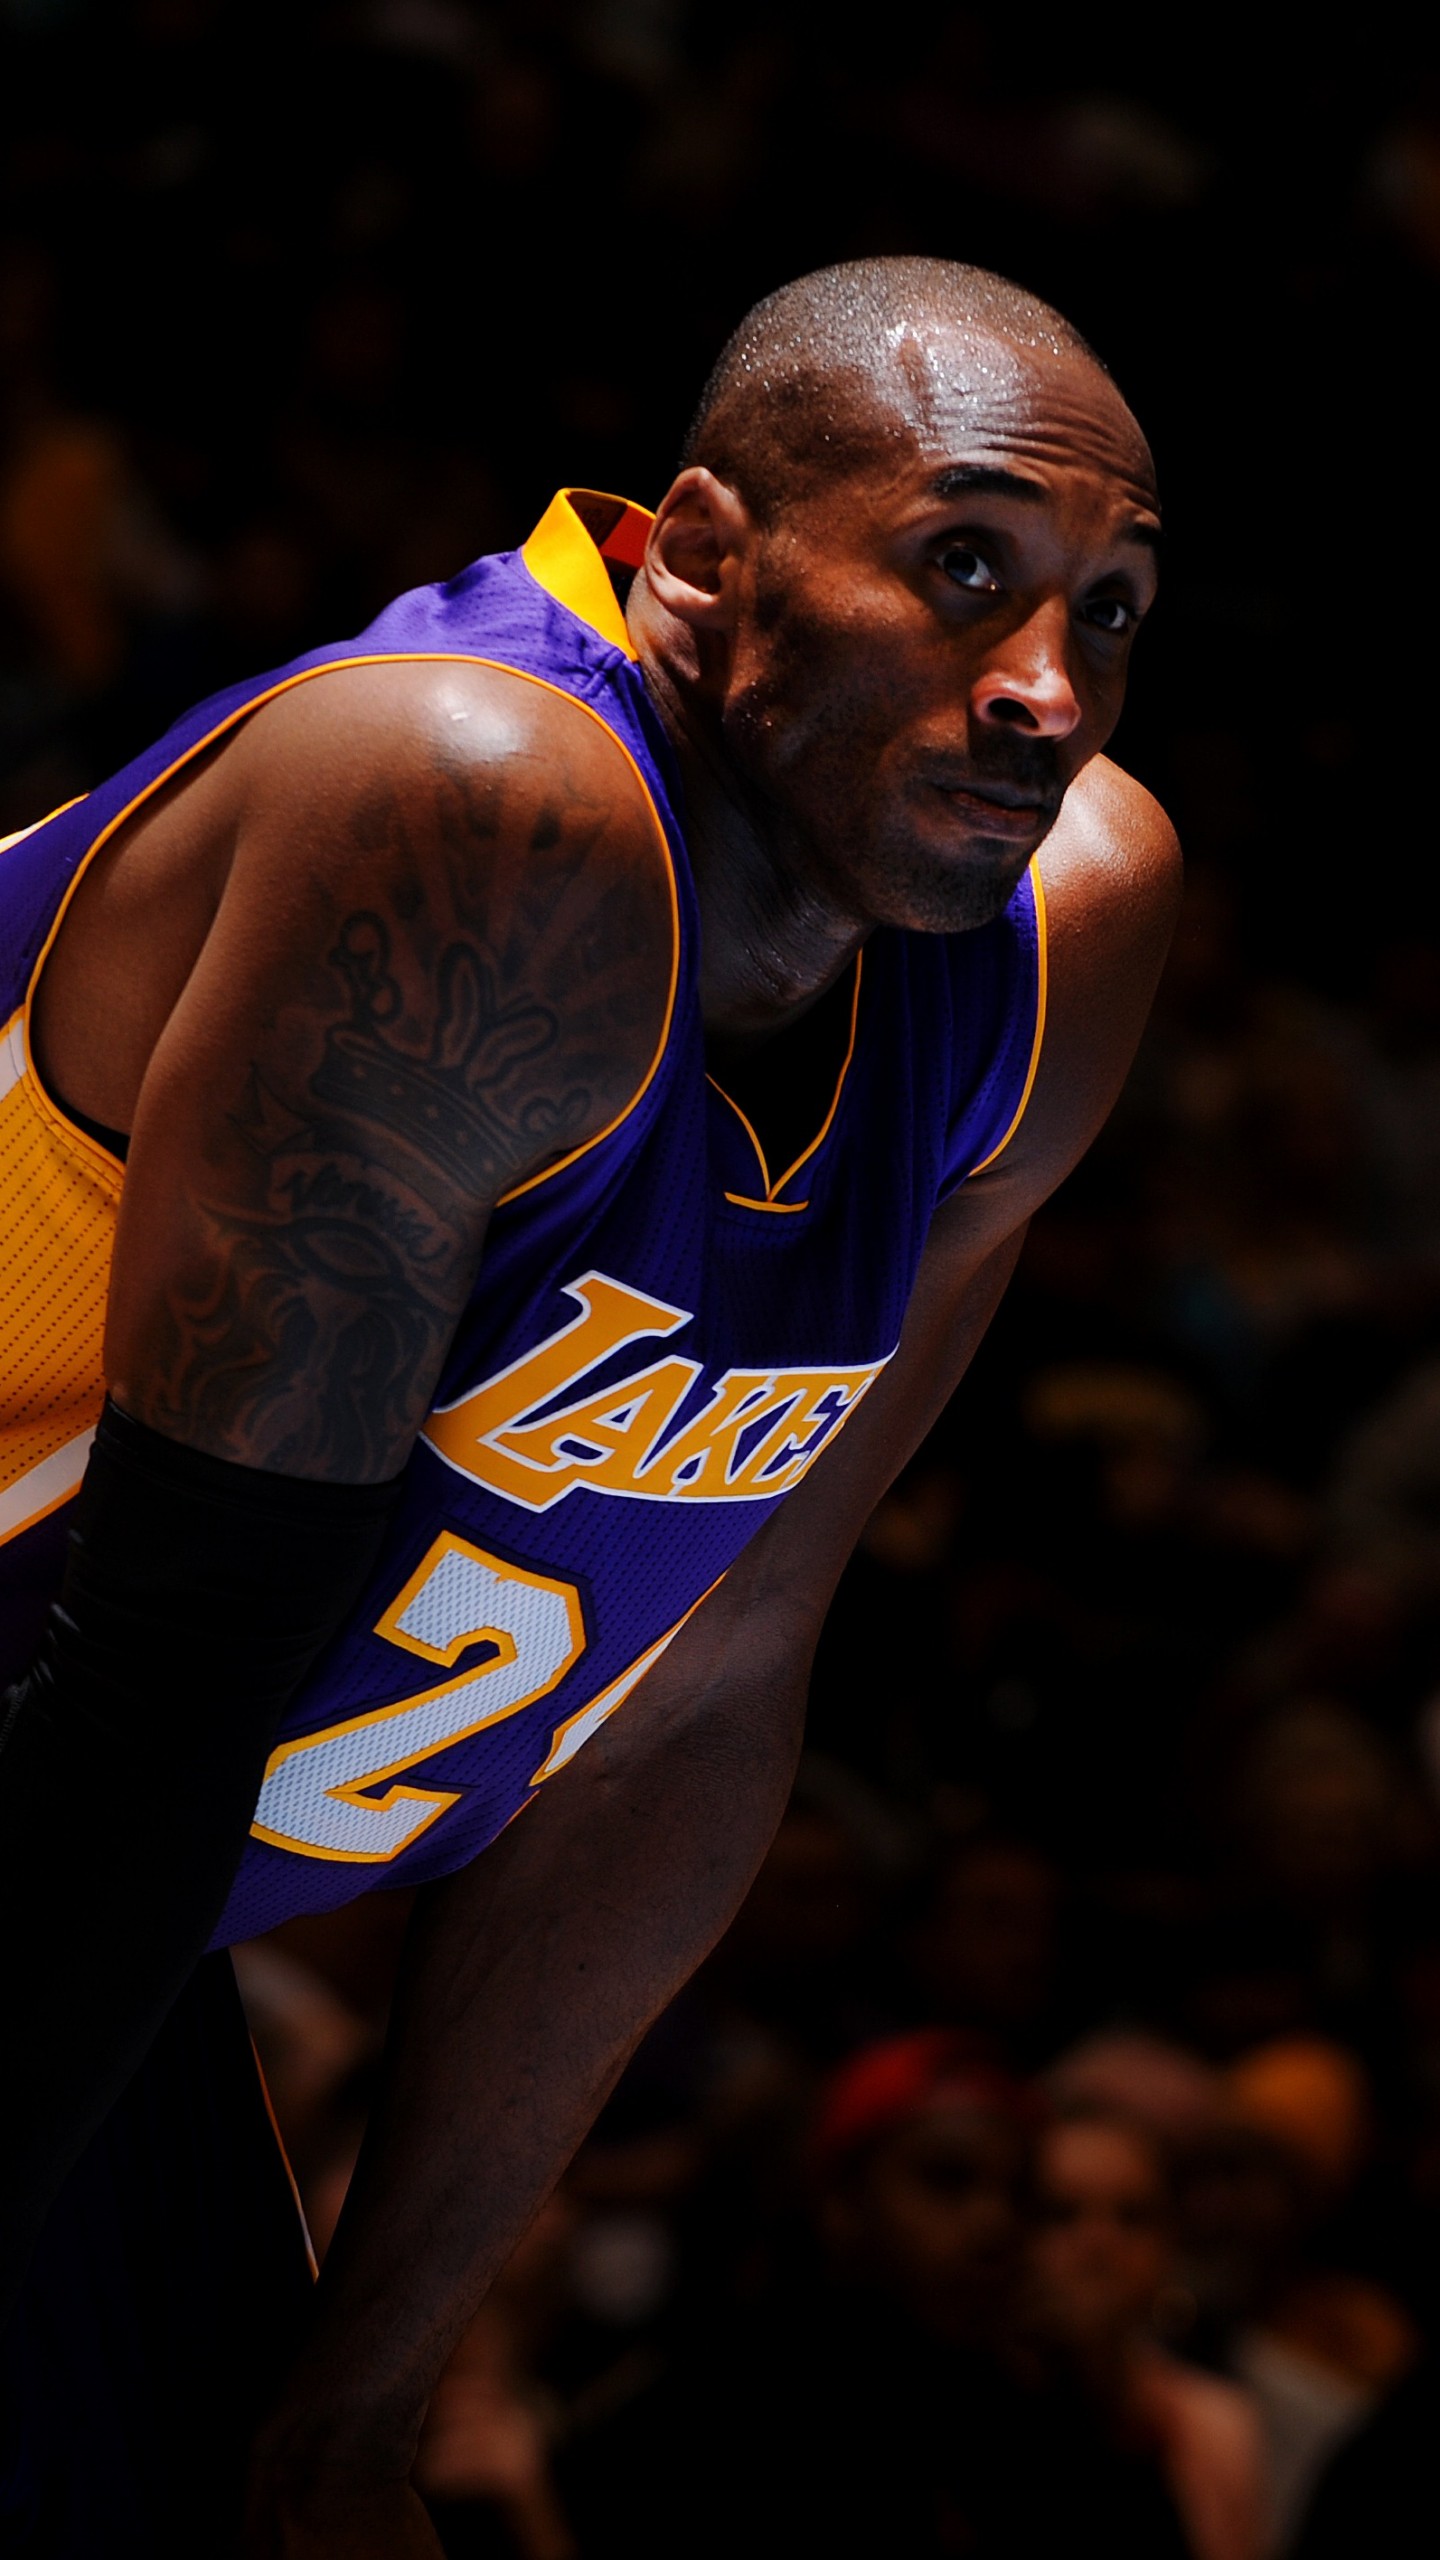 Wallpaper NBA, Kobe Bryant, Best Basketball Players of Los Angeles Lakers, basketball player, Shooting guard, Sport